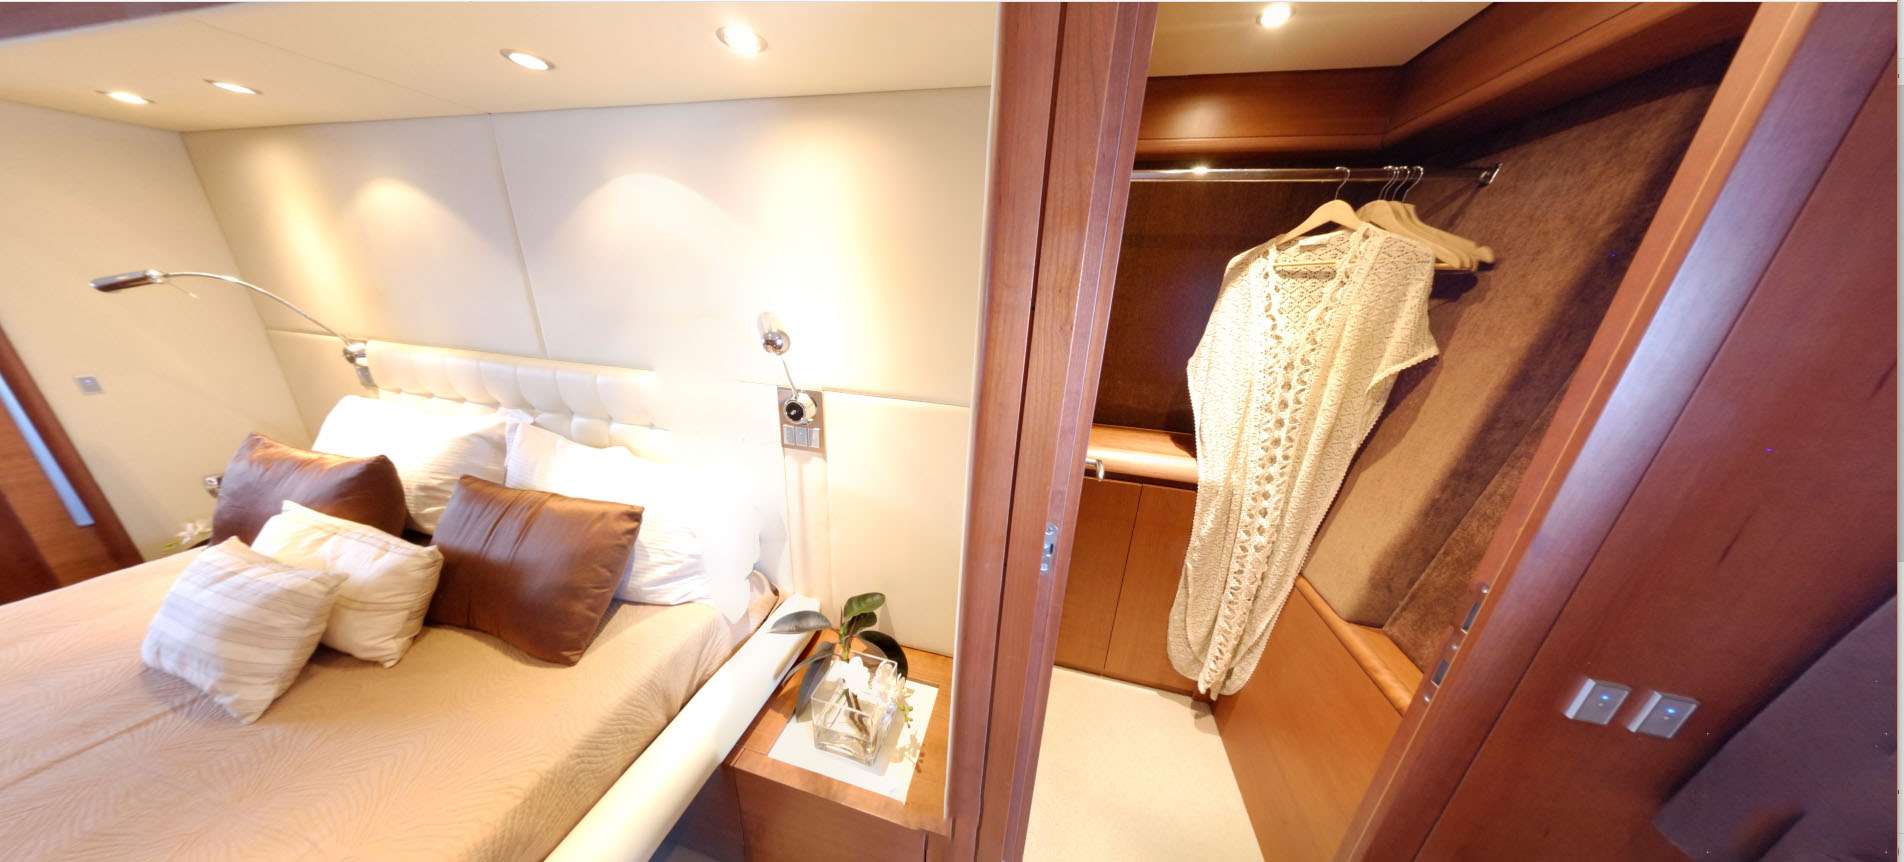 QUESTA e VITA Yacht Charter - Master cabin walk in closet